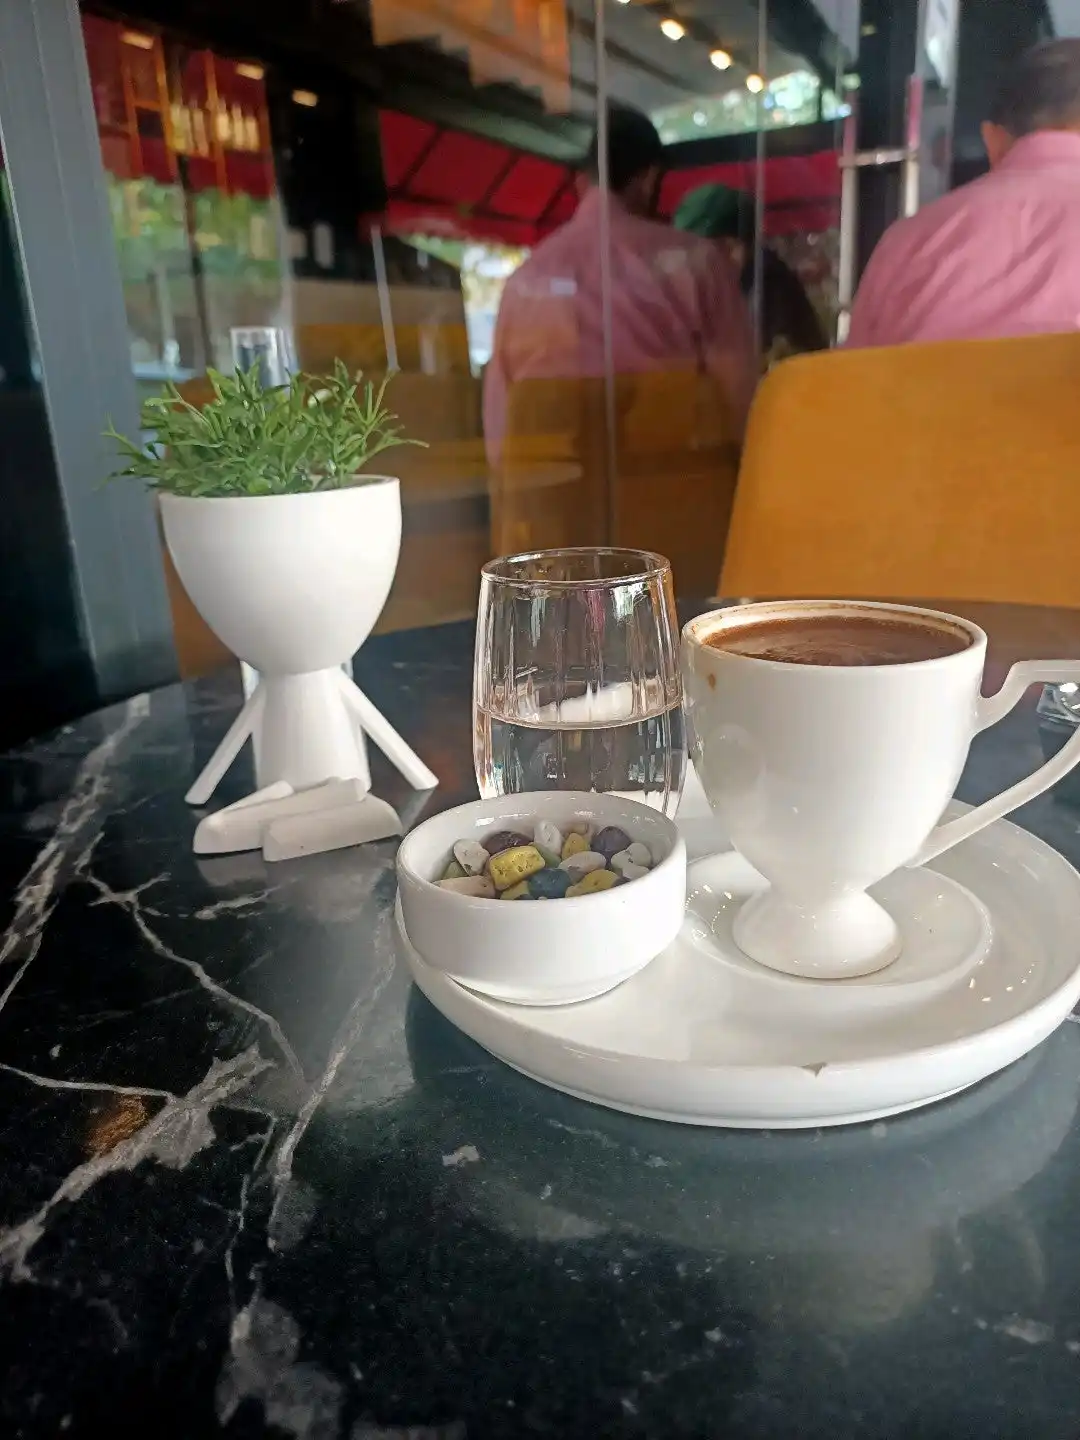 Pera Cafe